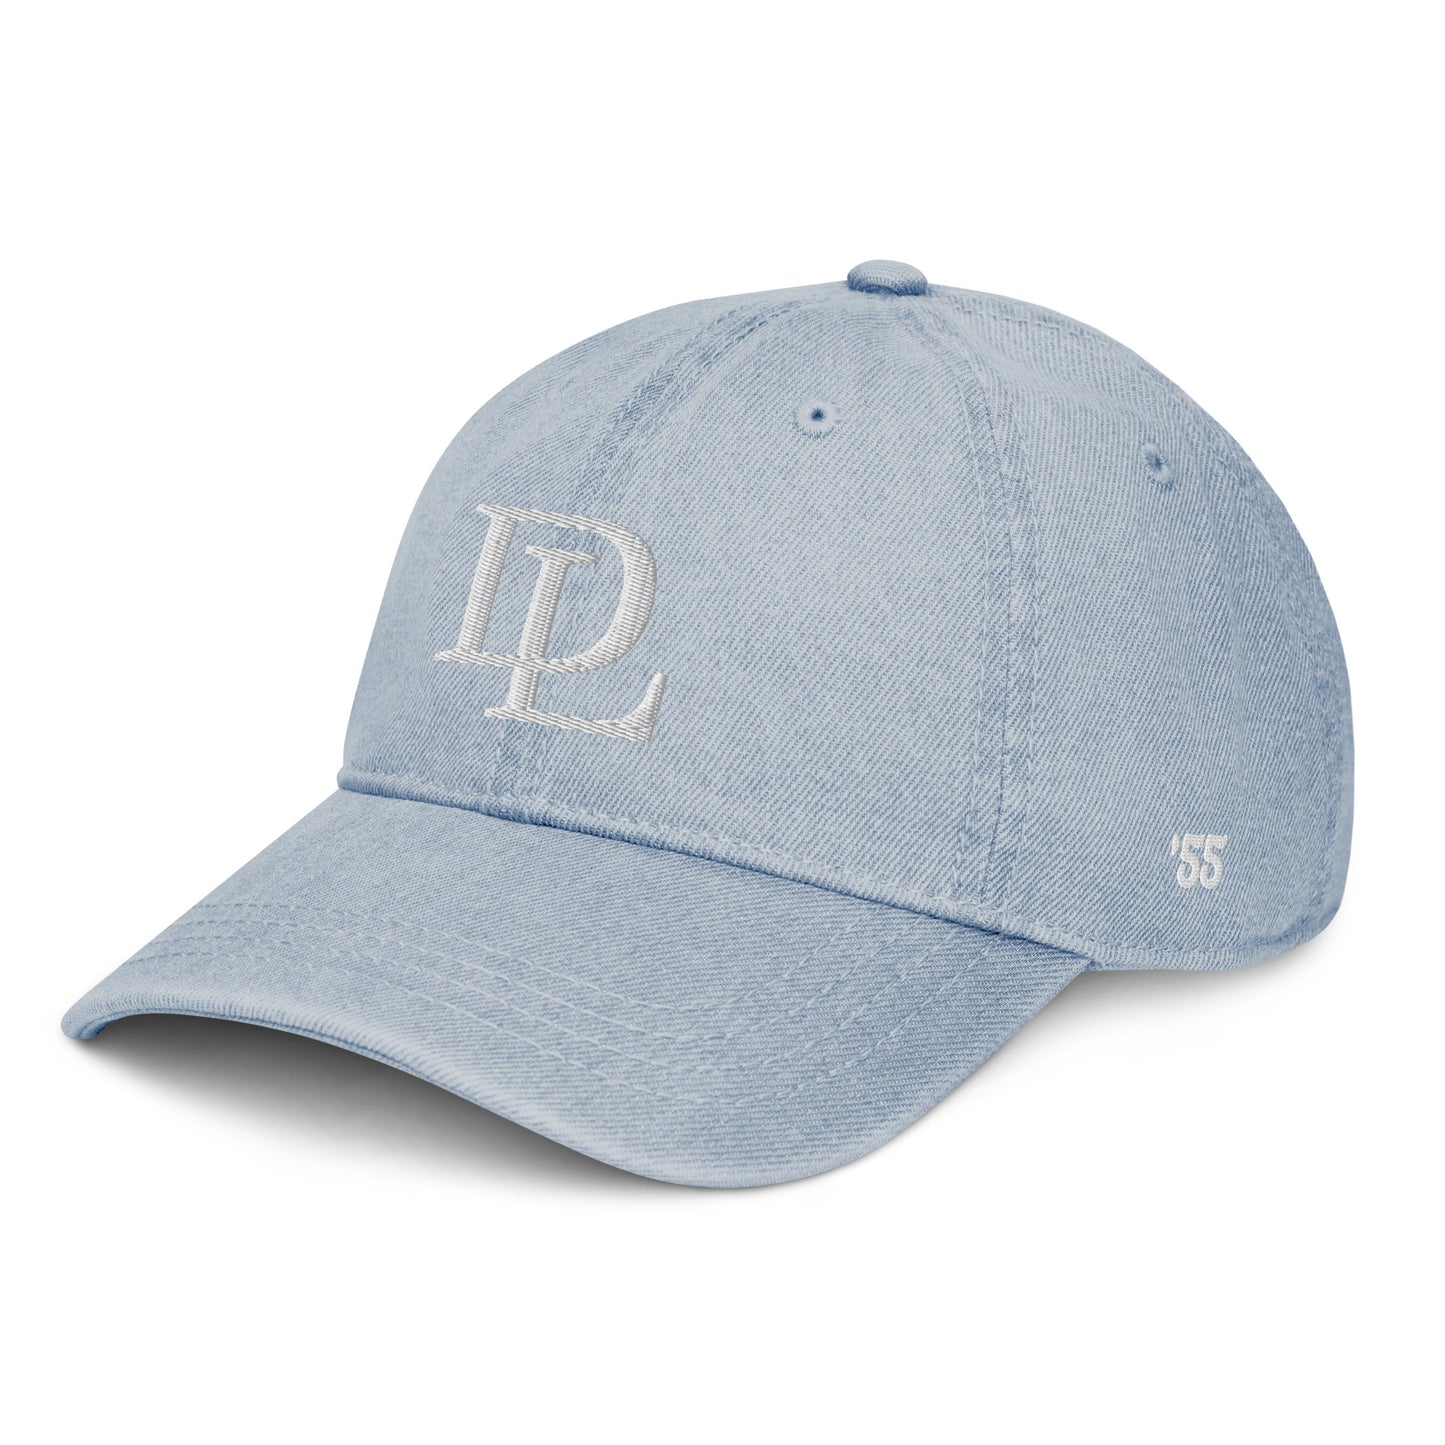 DL Disneyland Monogram Denim Hat